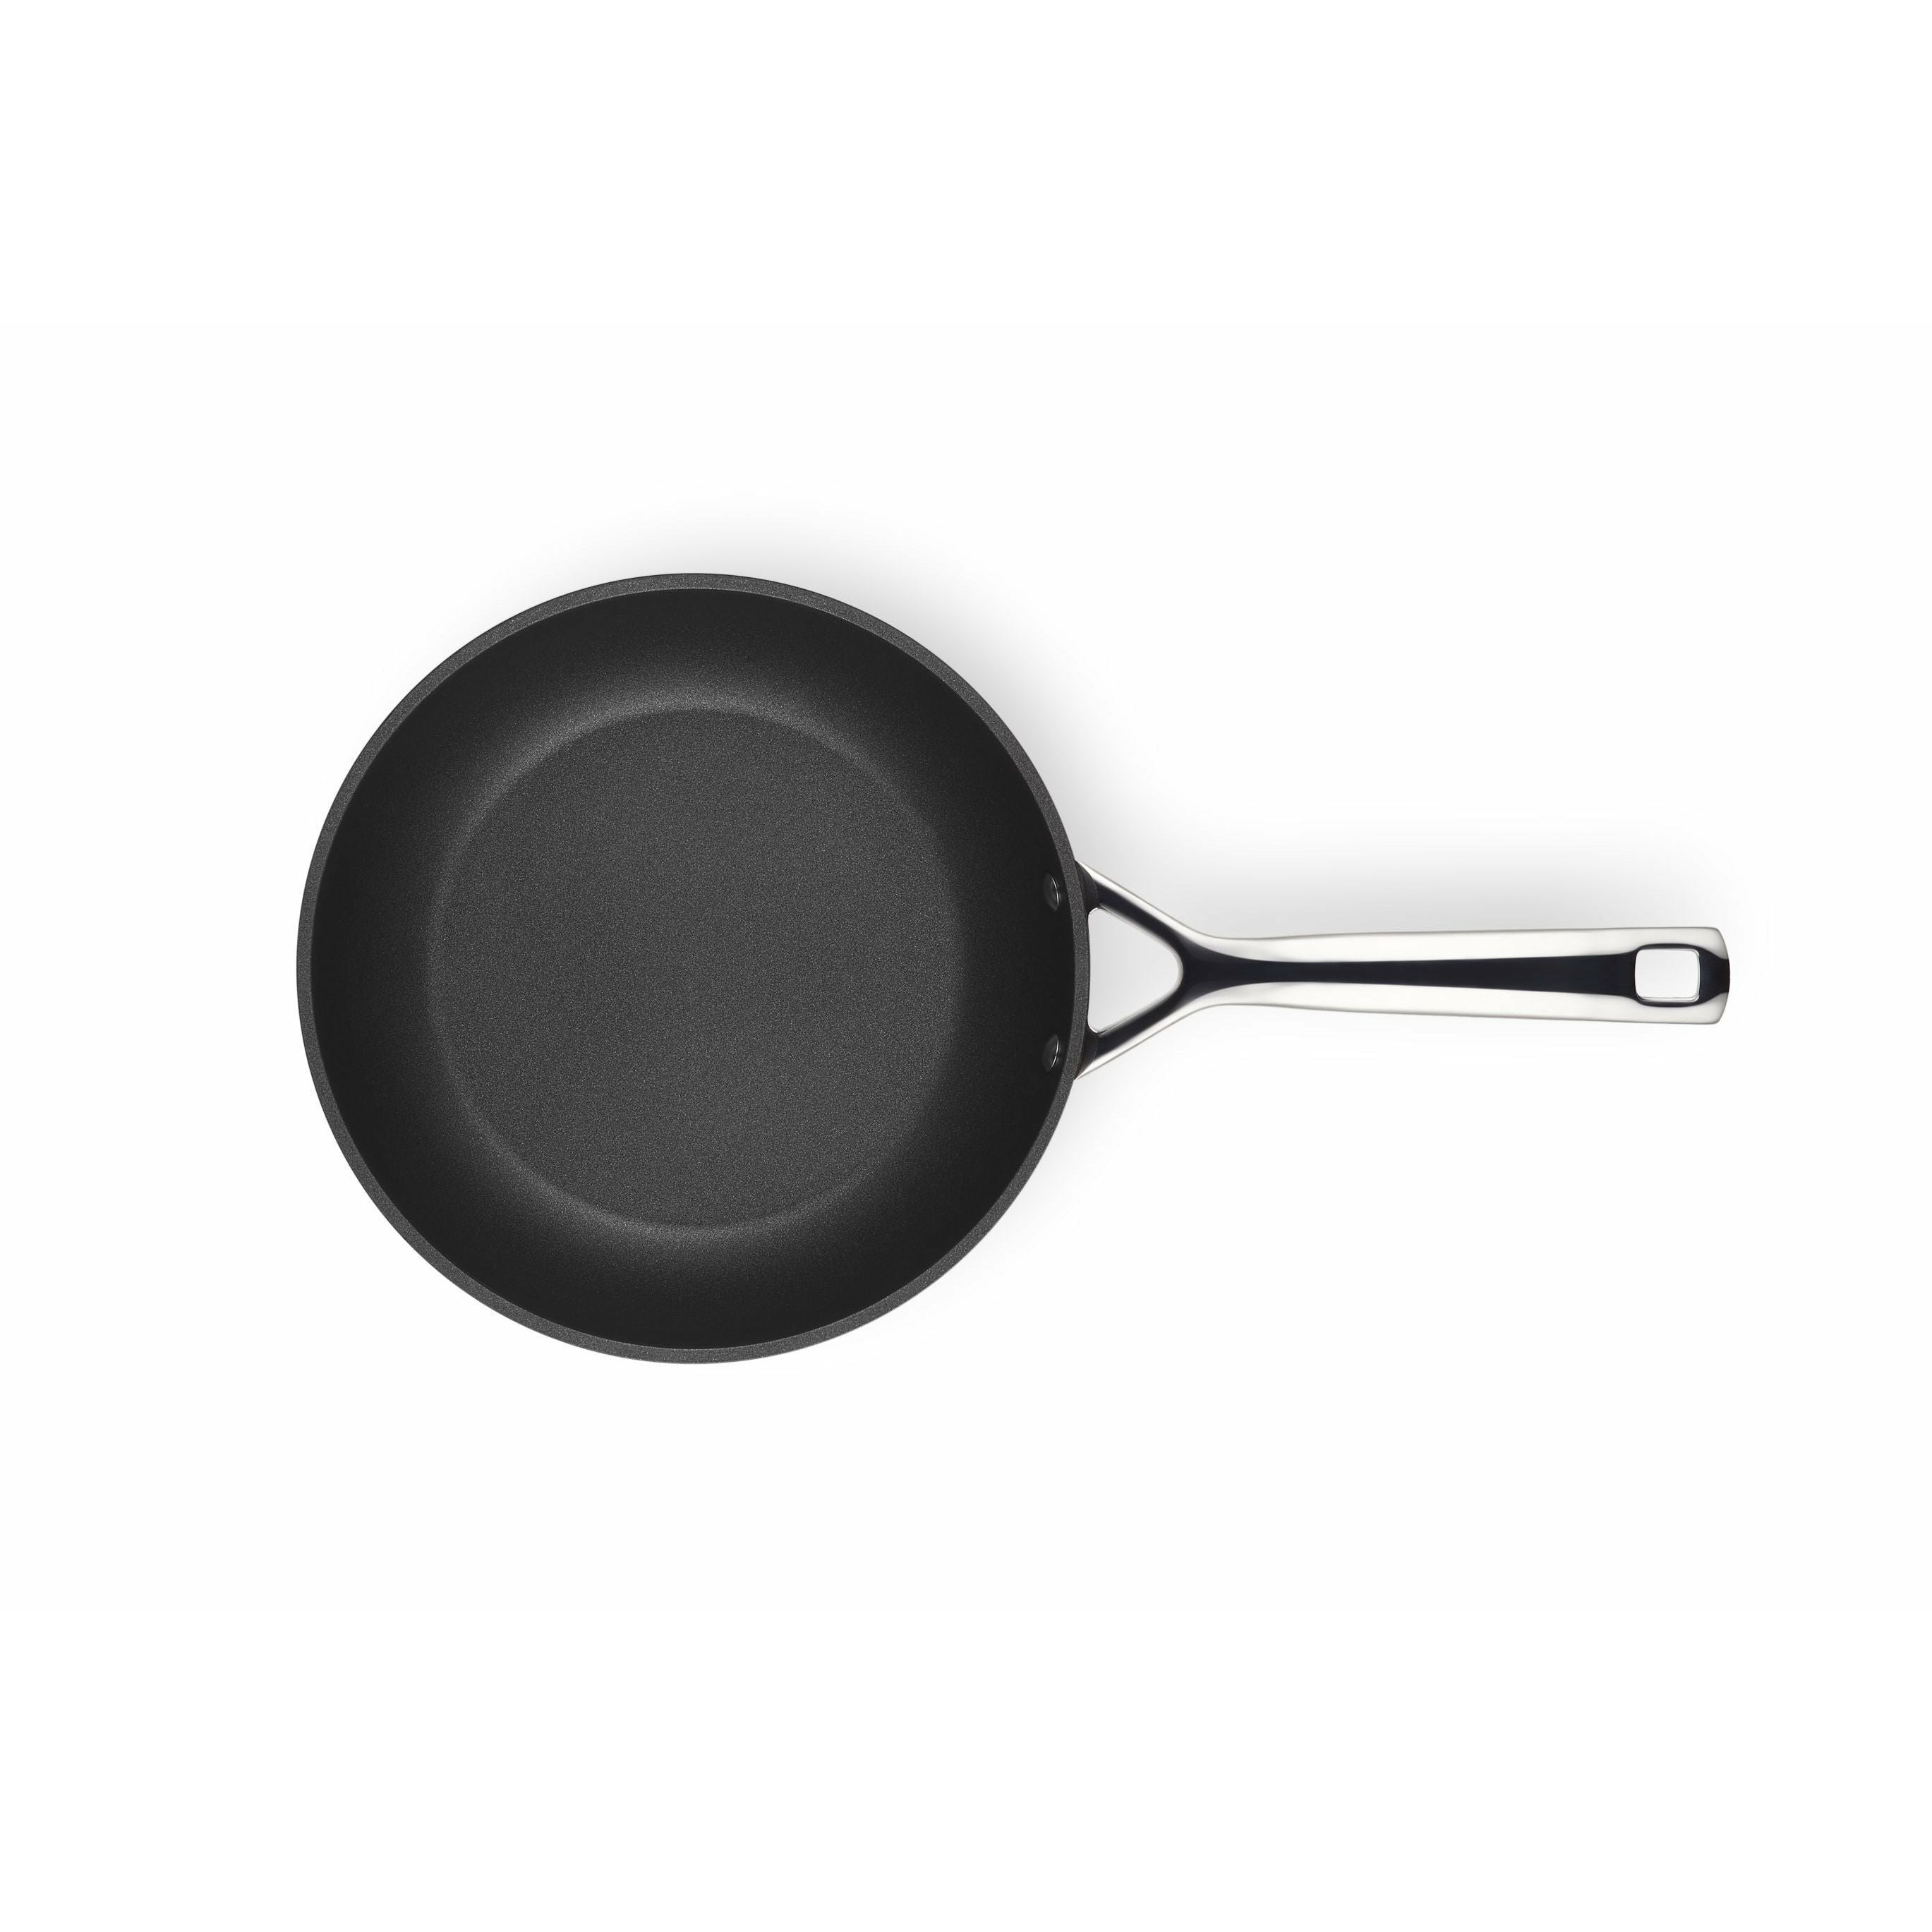 Le Creuset Aluminium Non Stick Flat Pan, 24 Cm